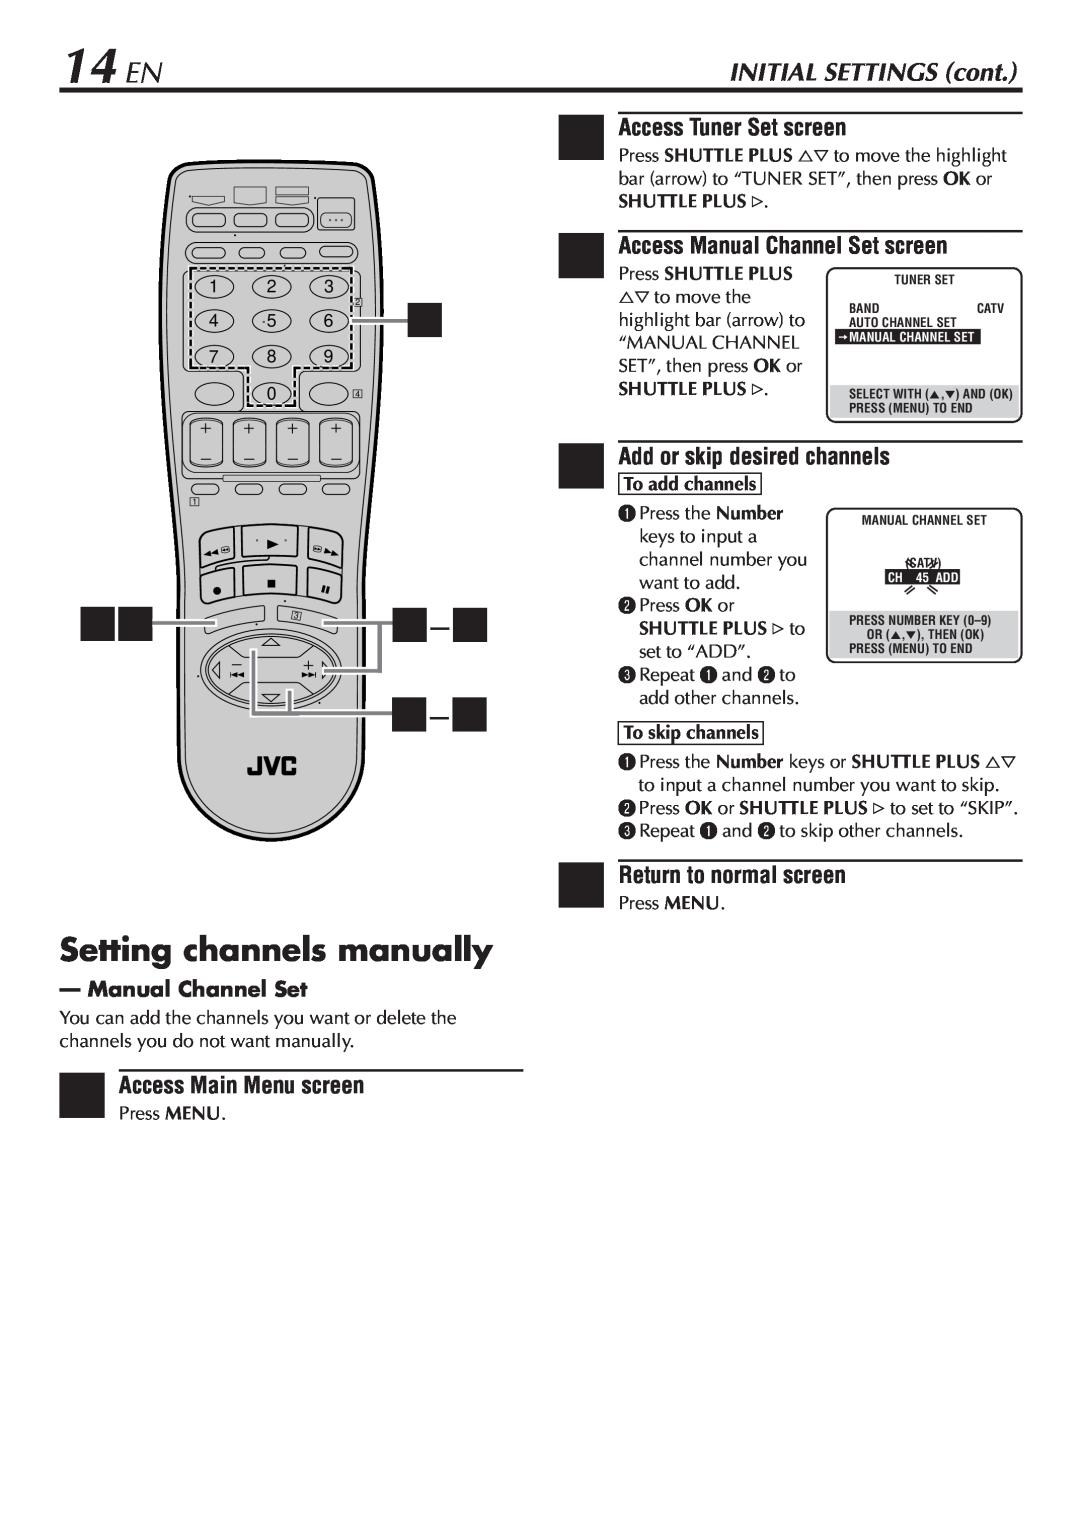 JVC SR-V10U 14 EN, 152-4, Setting channels manually, 3Access Manual Channel Set screen, Add or skip desired channels 